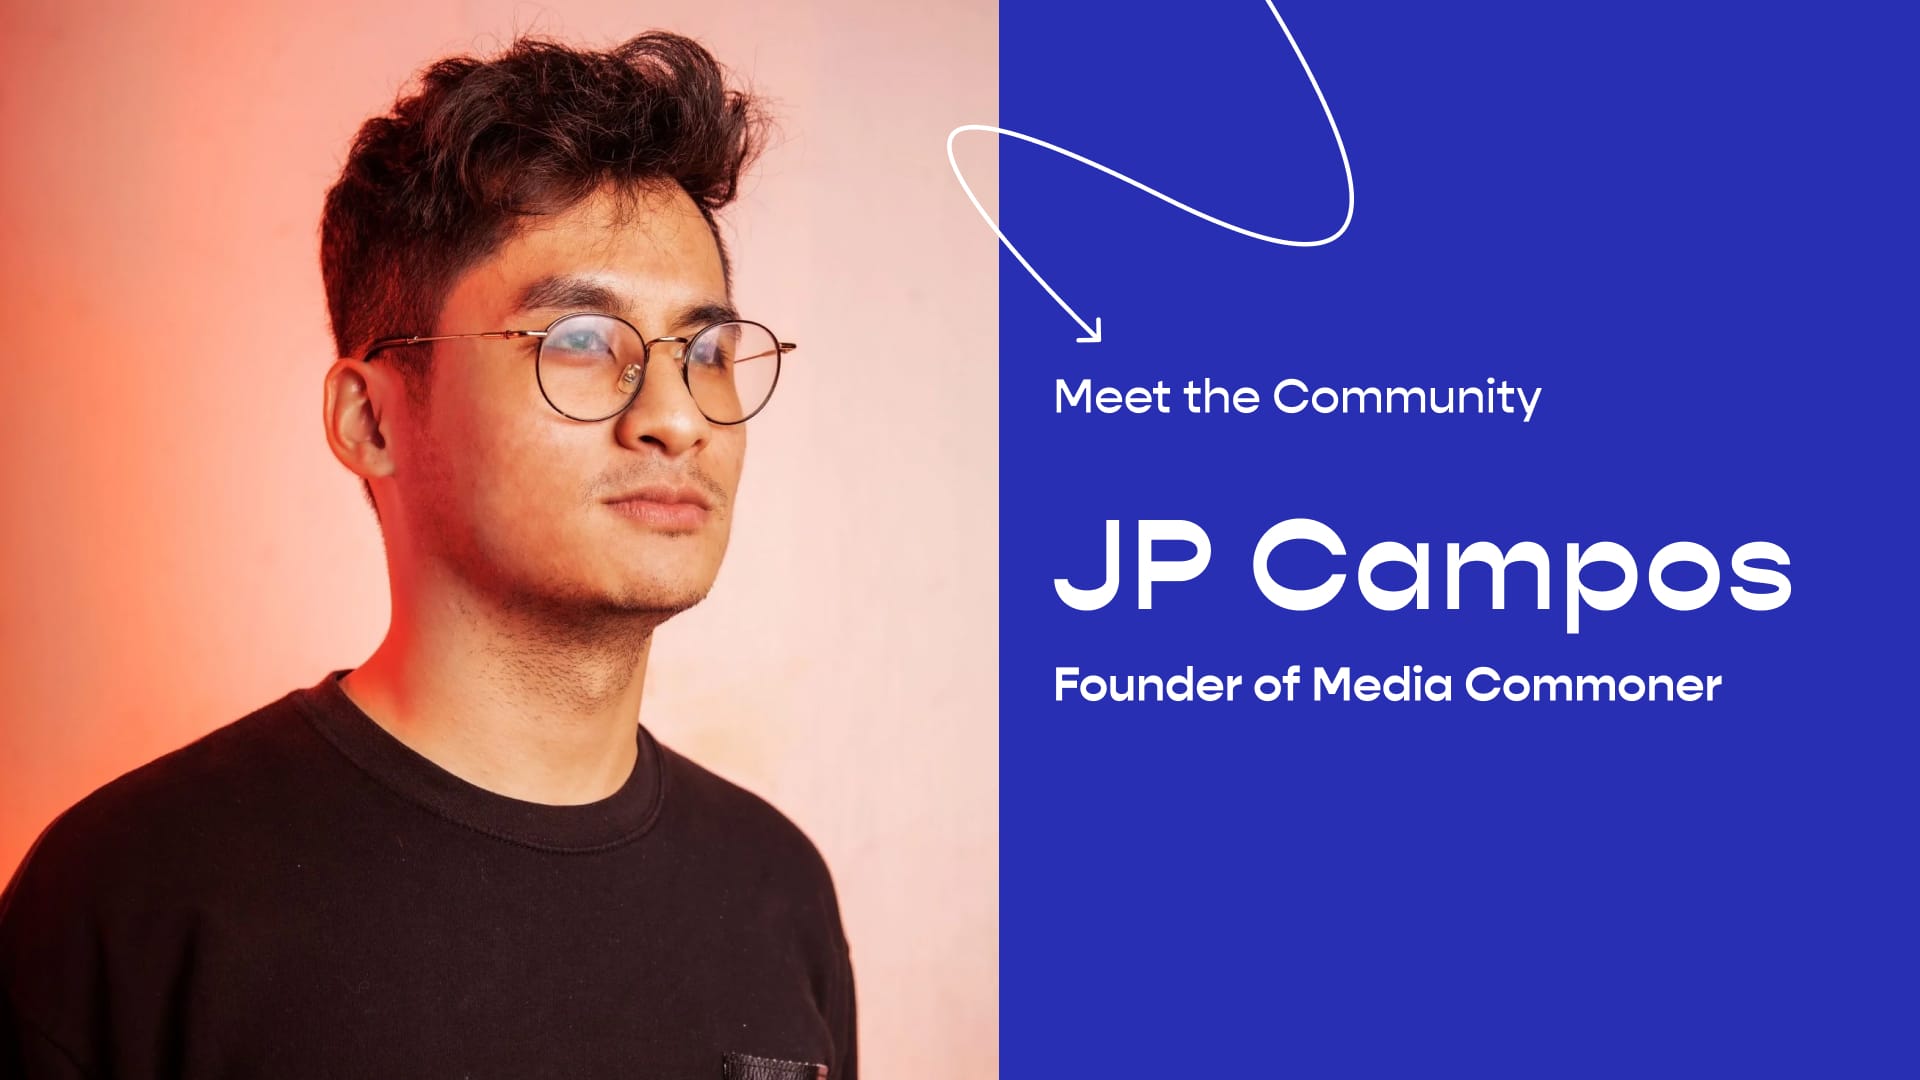 Meet the Community: JP Campos